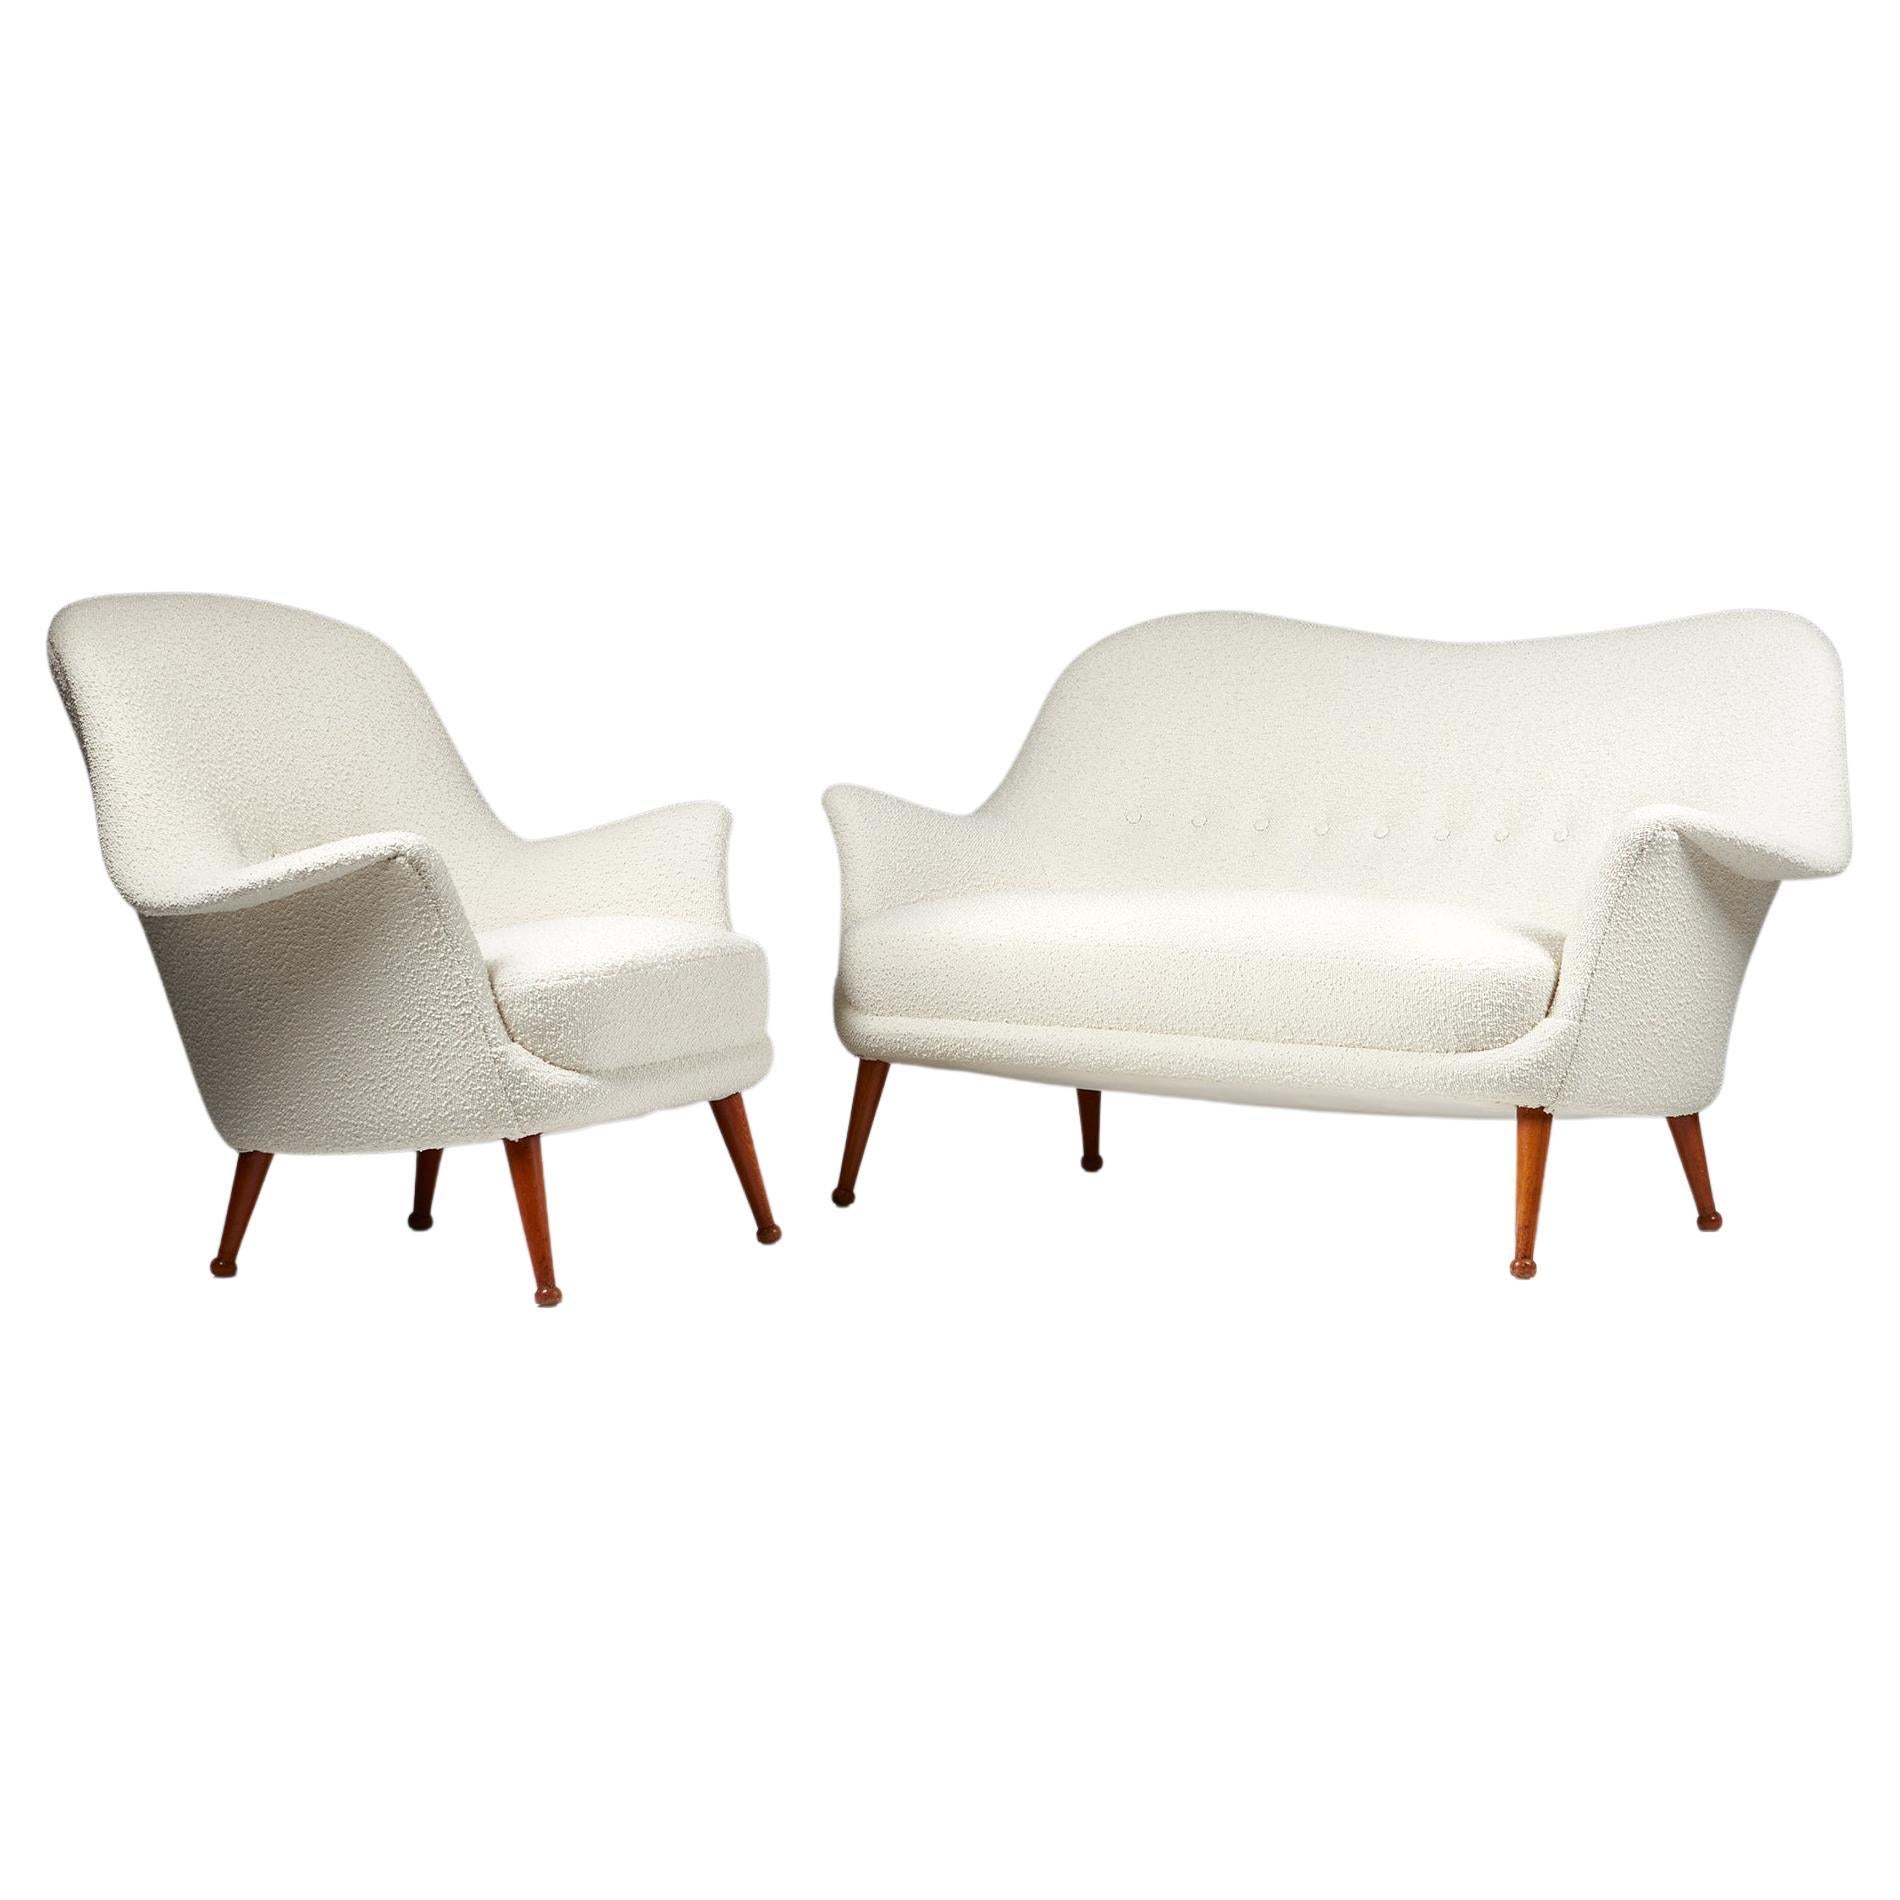 Sofa and Armchair “Divina” Designed by Arne Norell, for Norell Möbler, Sweden